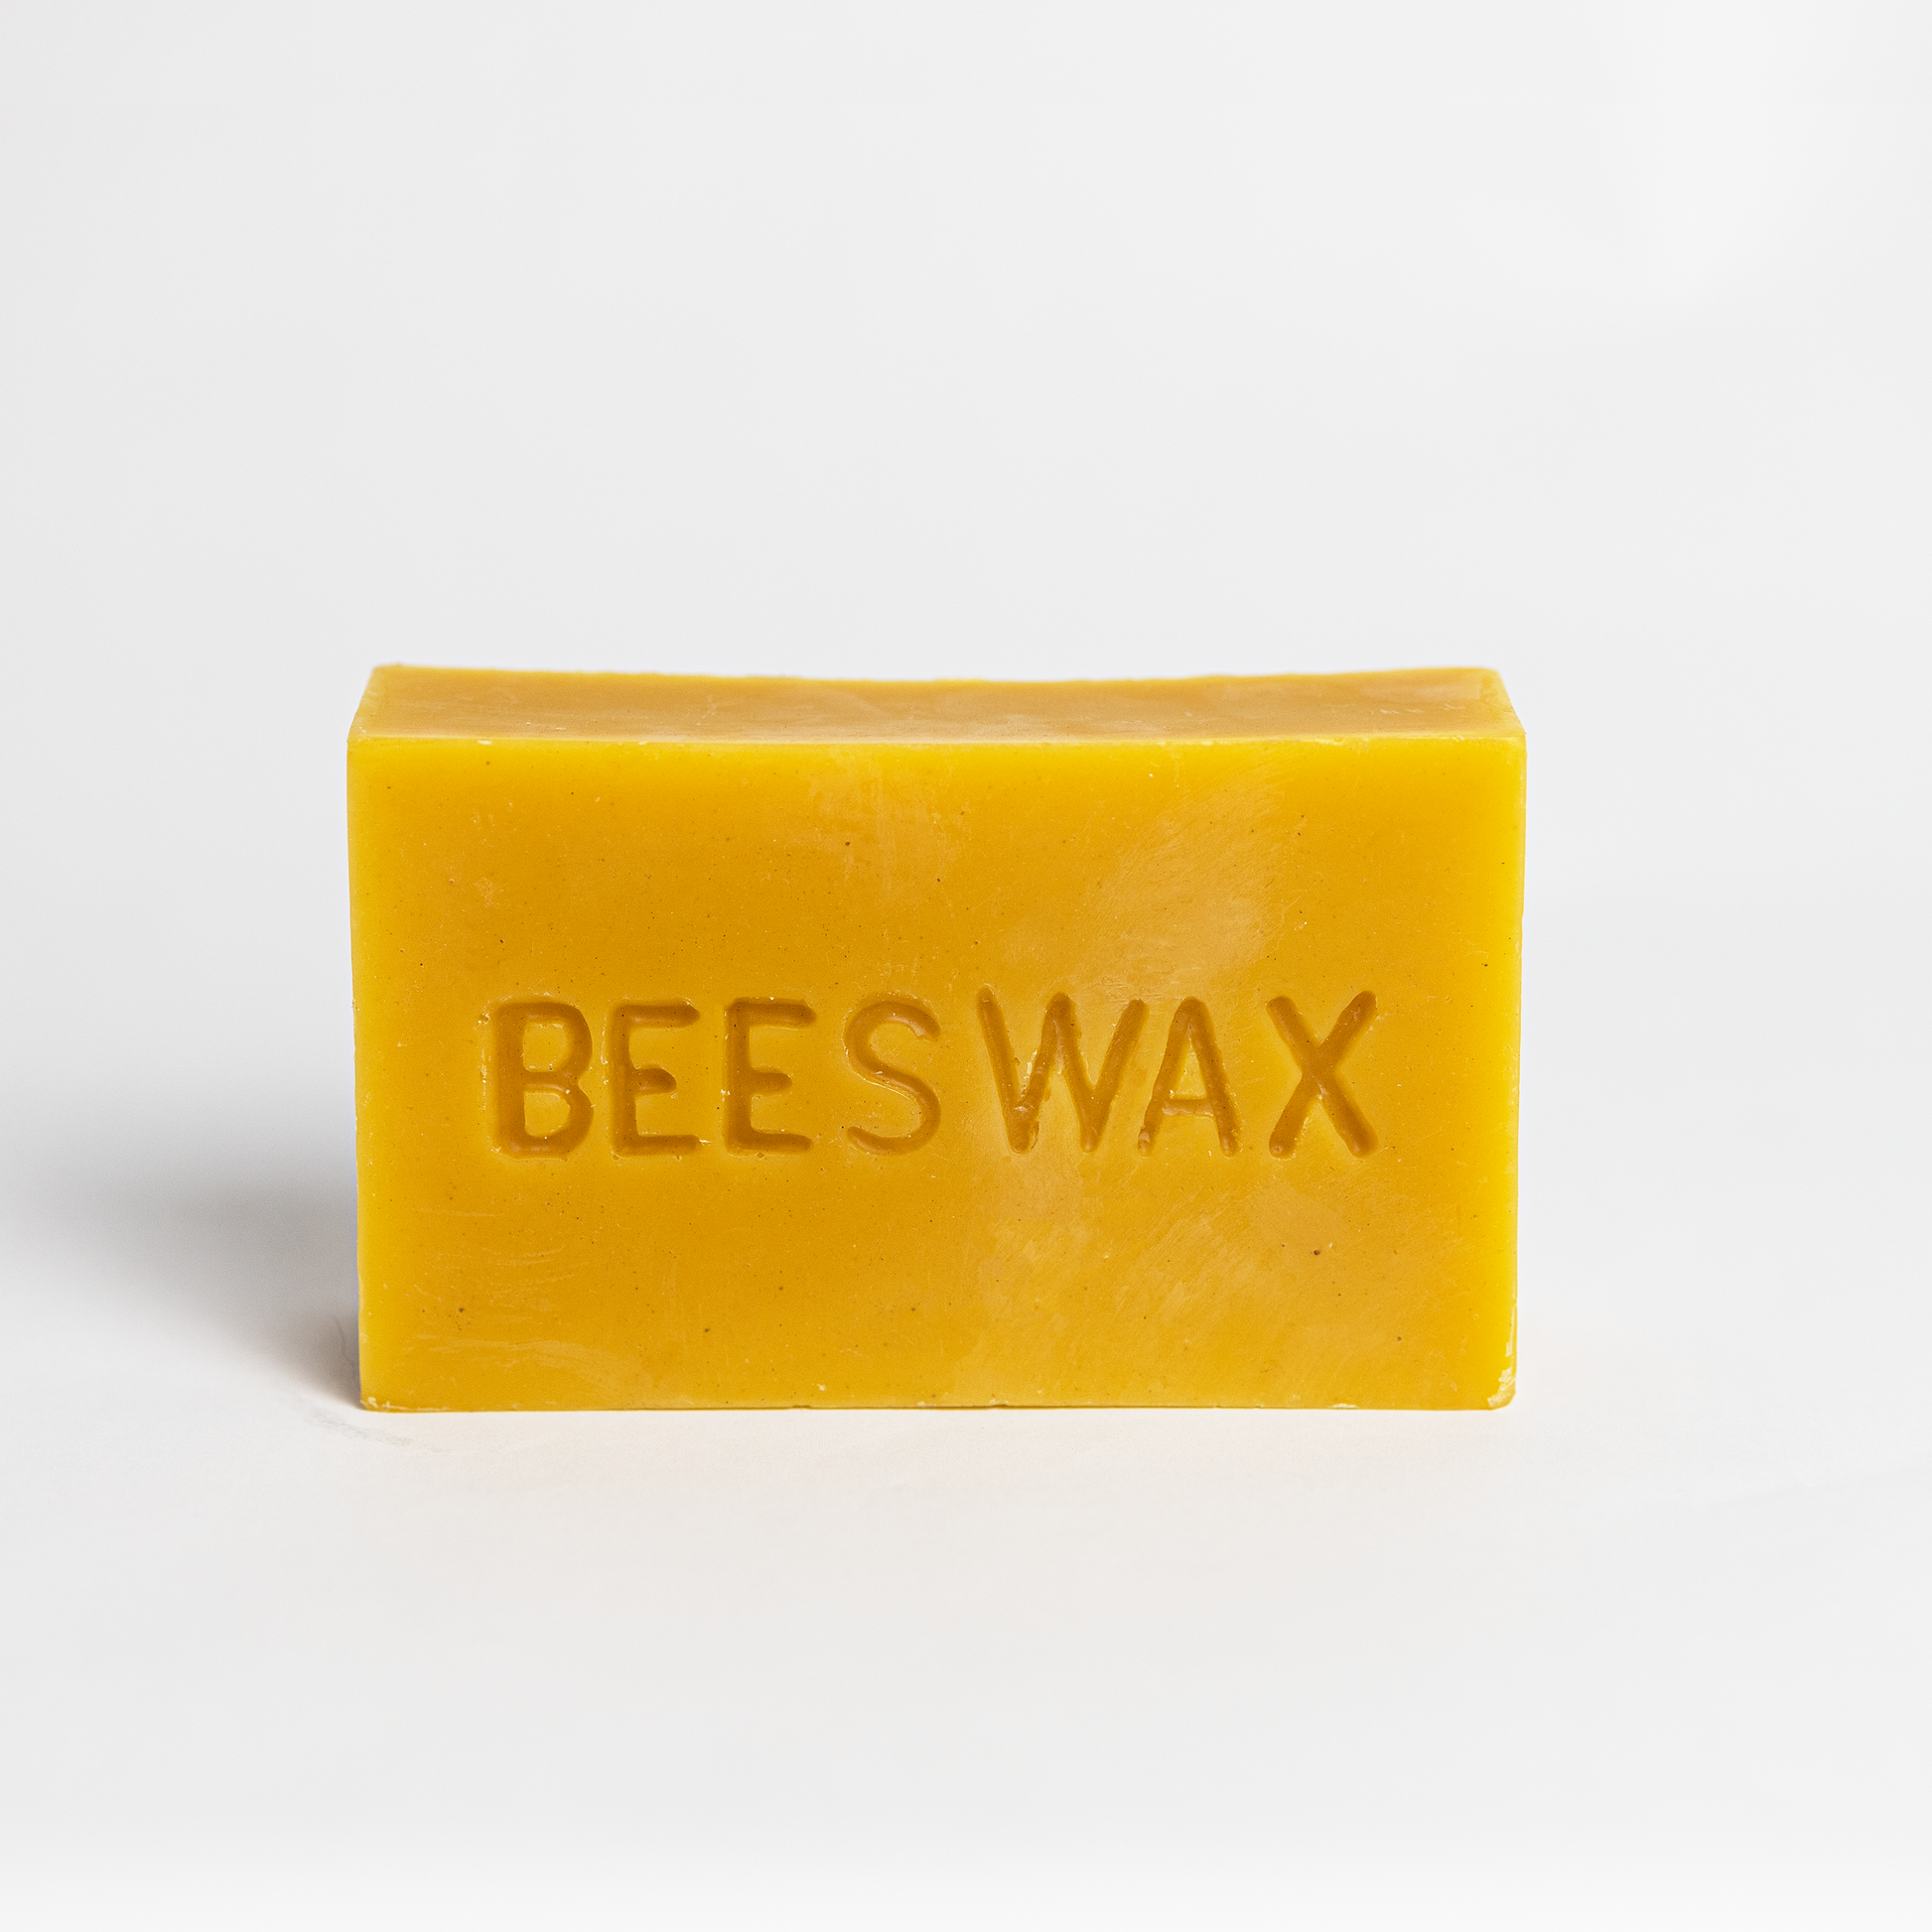 Pure Beeswax 1lb Block